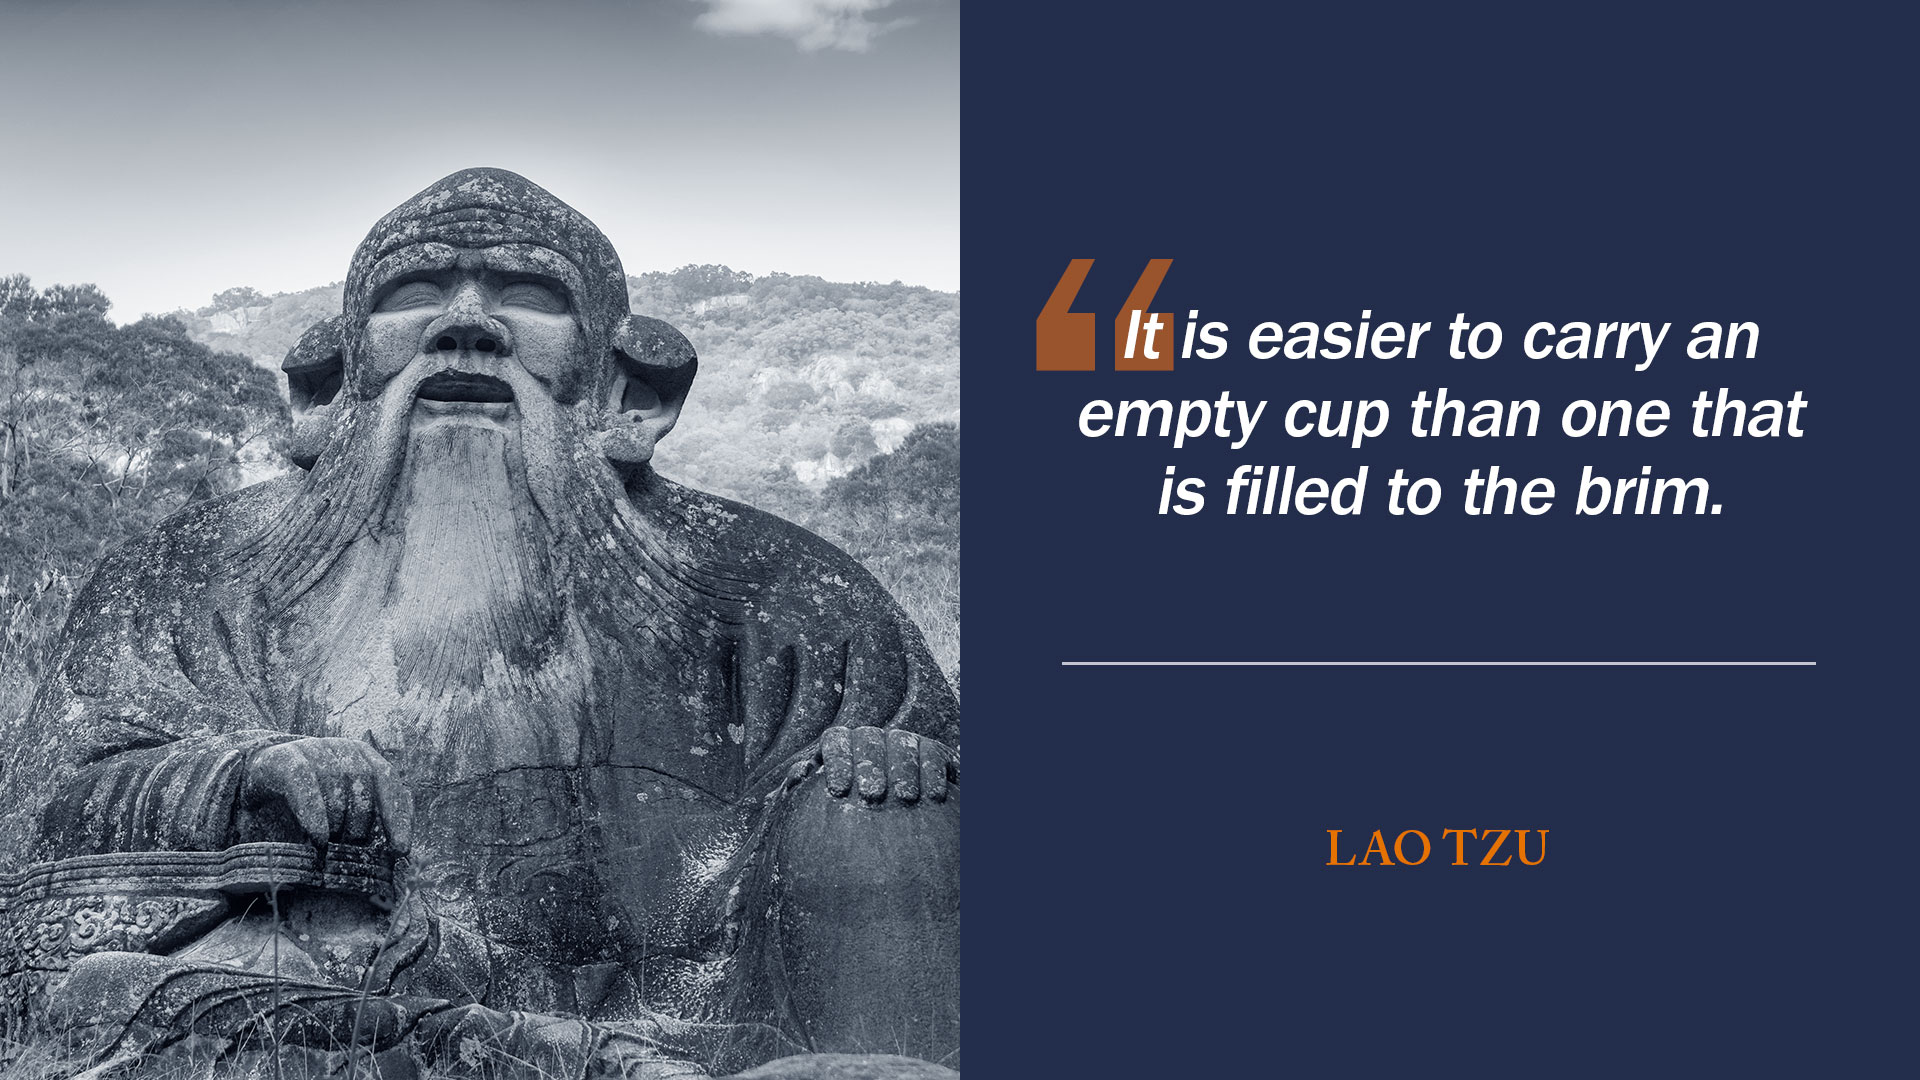 Lao Tzu statue with quote